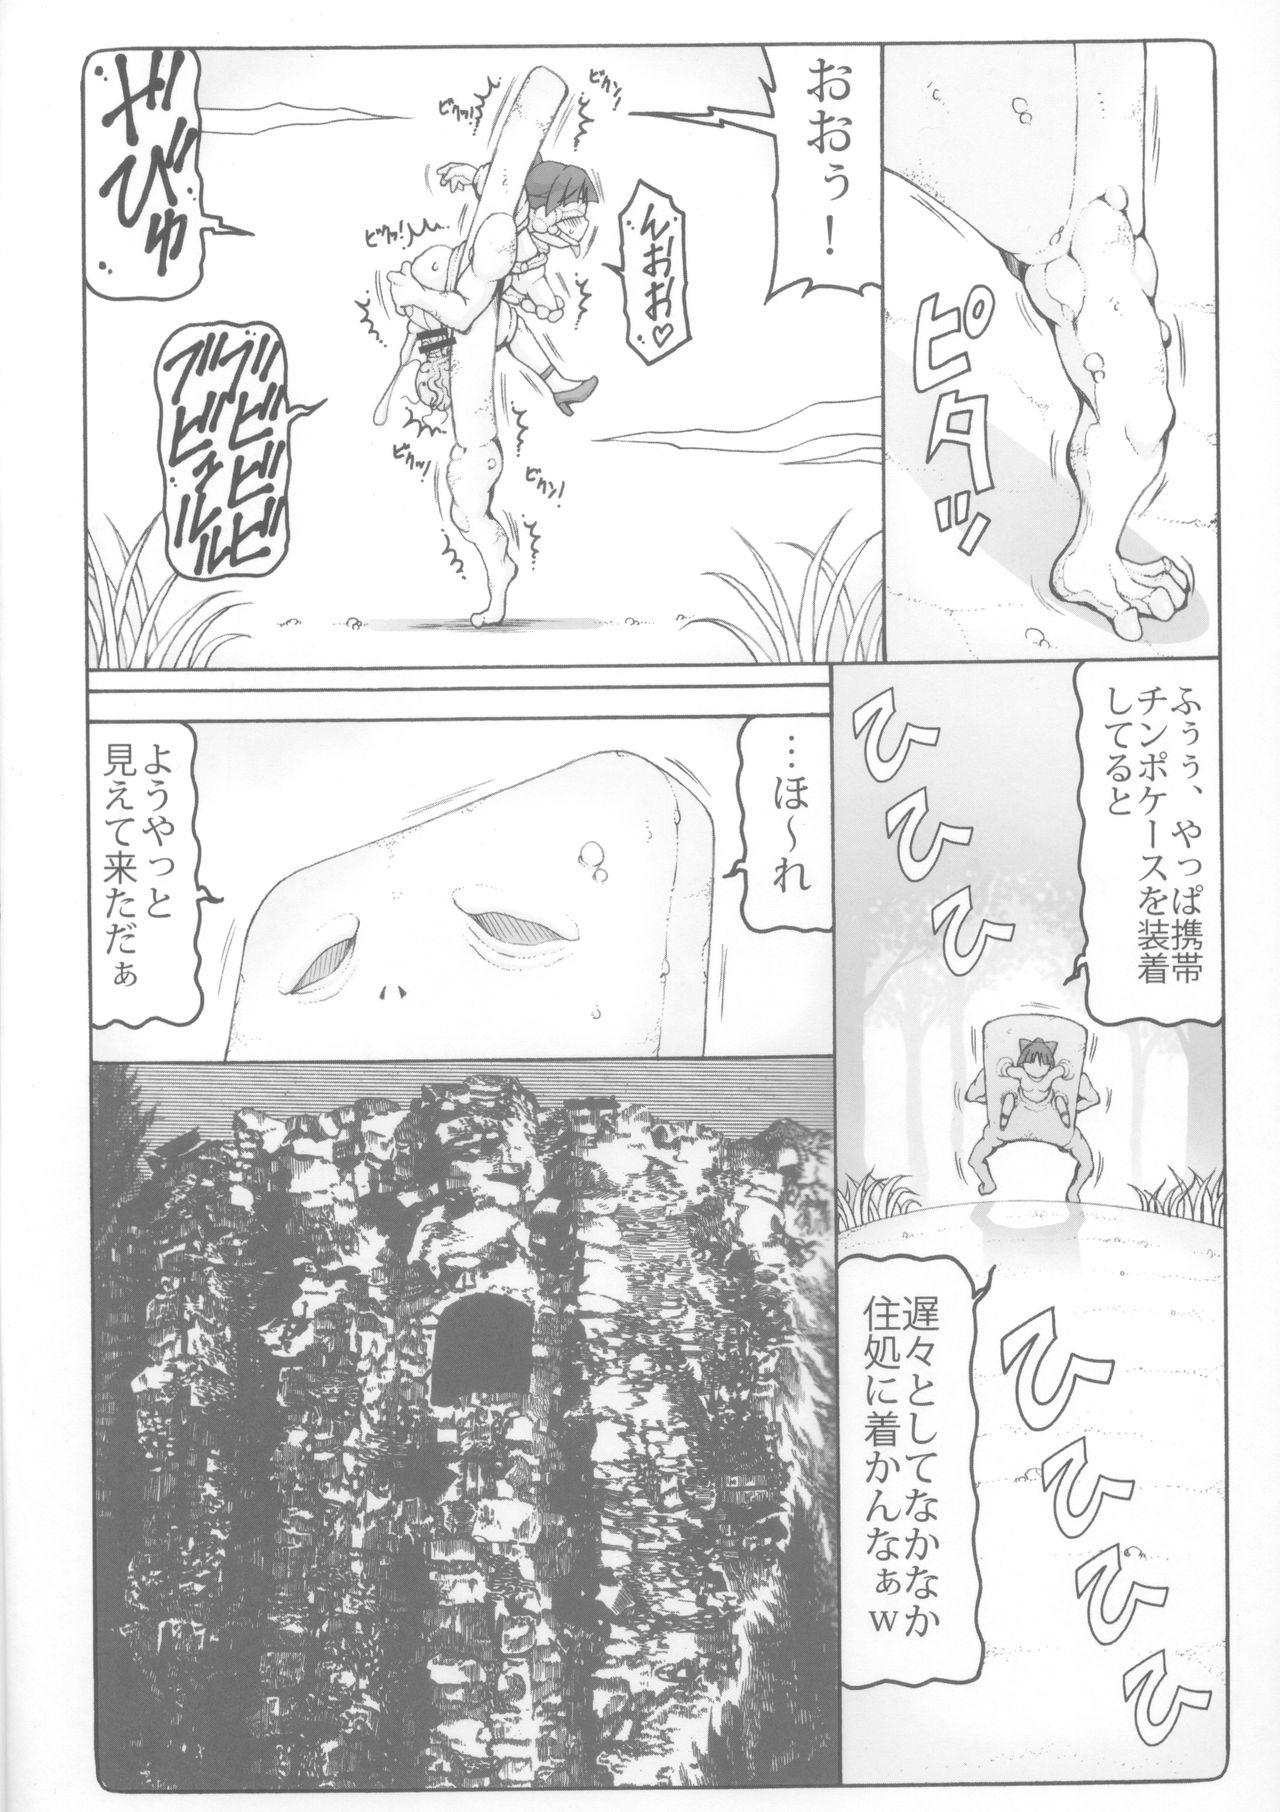 Nuko Musume vs Youkai Shirikabe 2 5